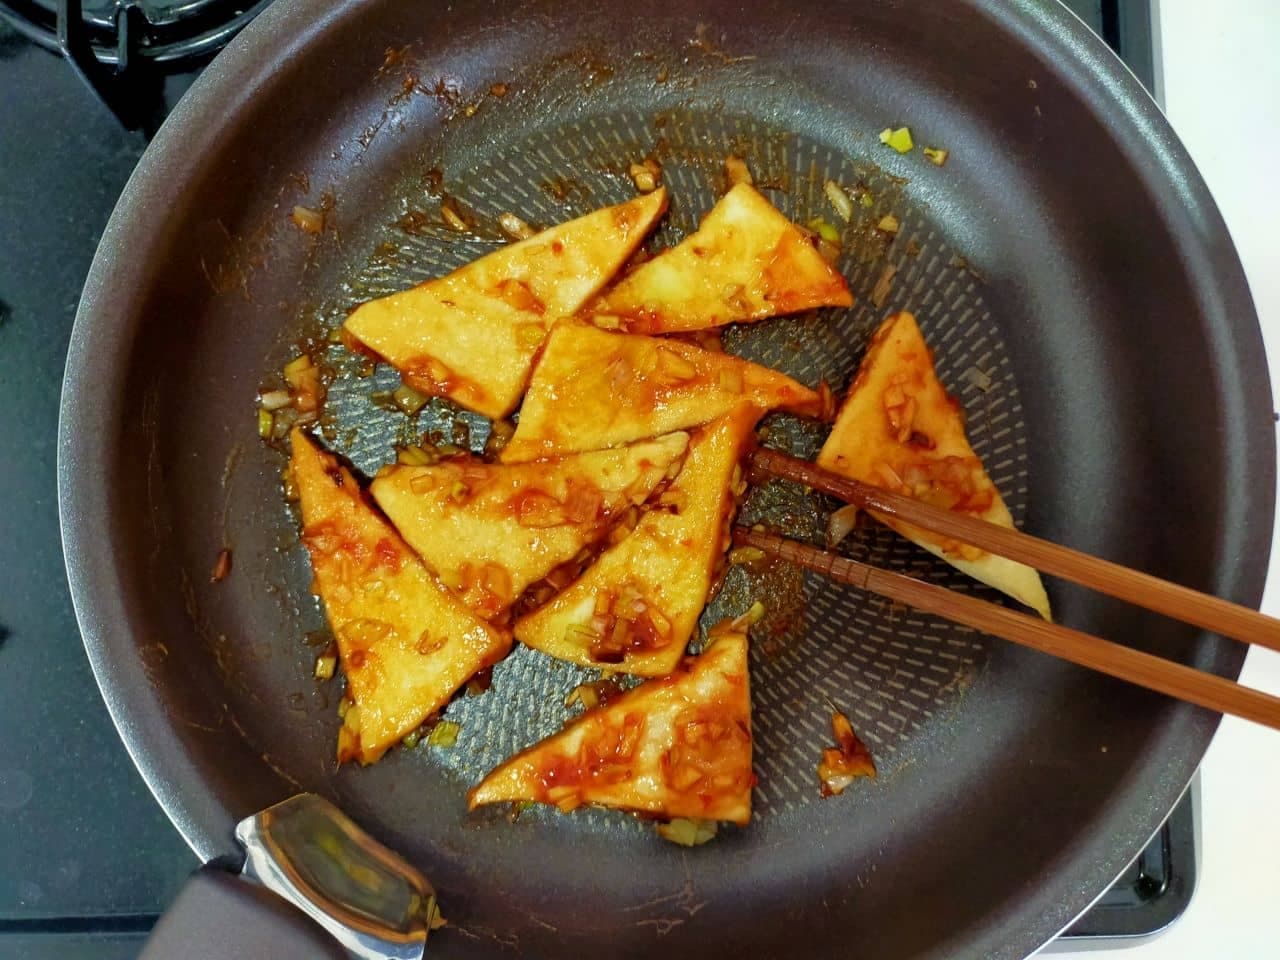 "Koya-dofu stir-fried with chili" recipe